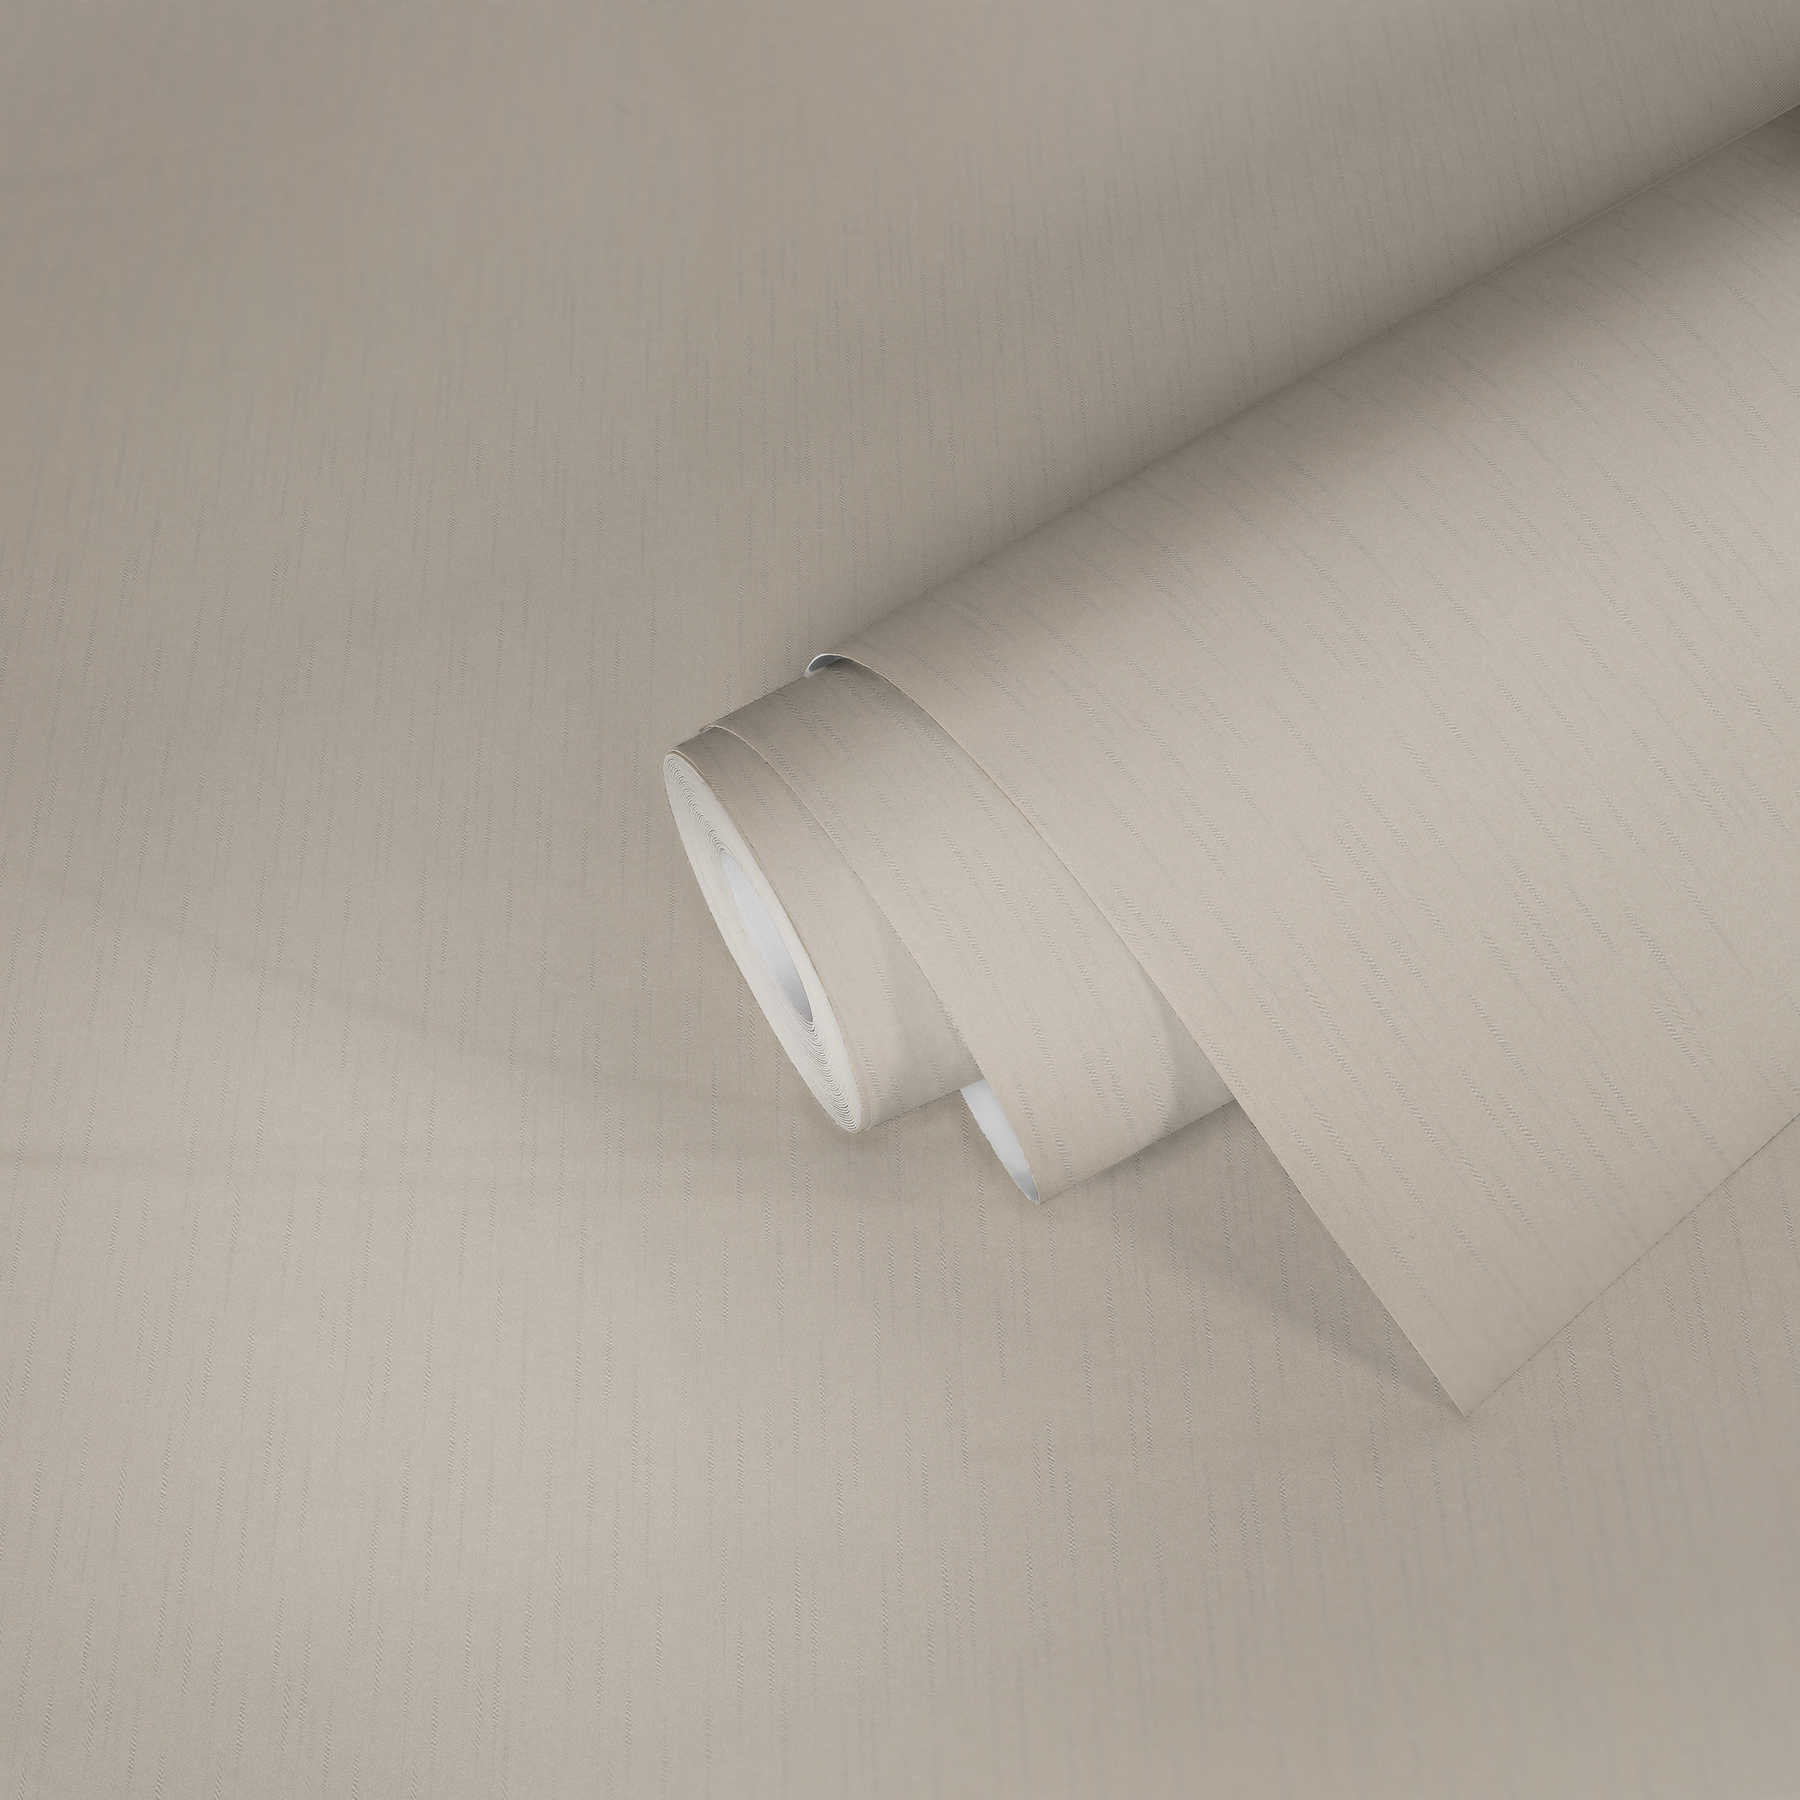             Papiertapete Creme mit melierter Struktur & textilem Effekt
        